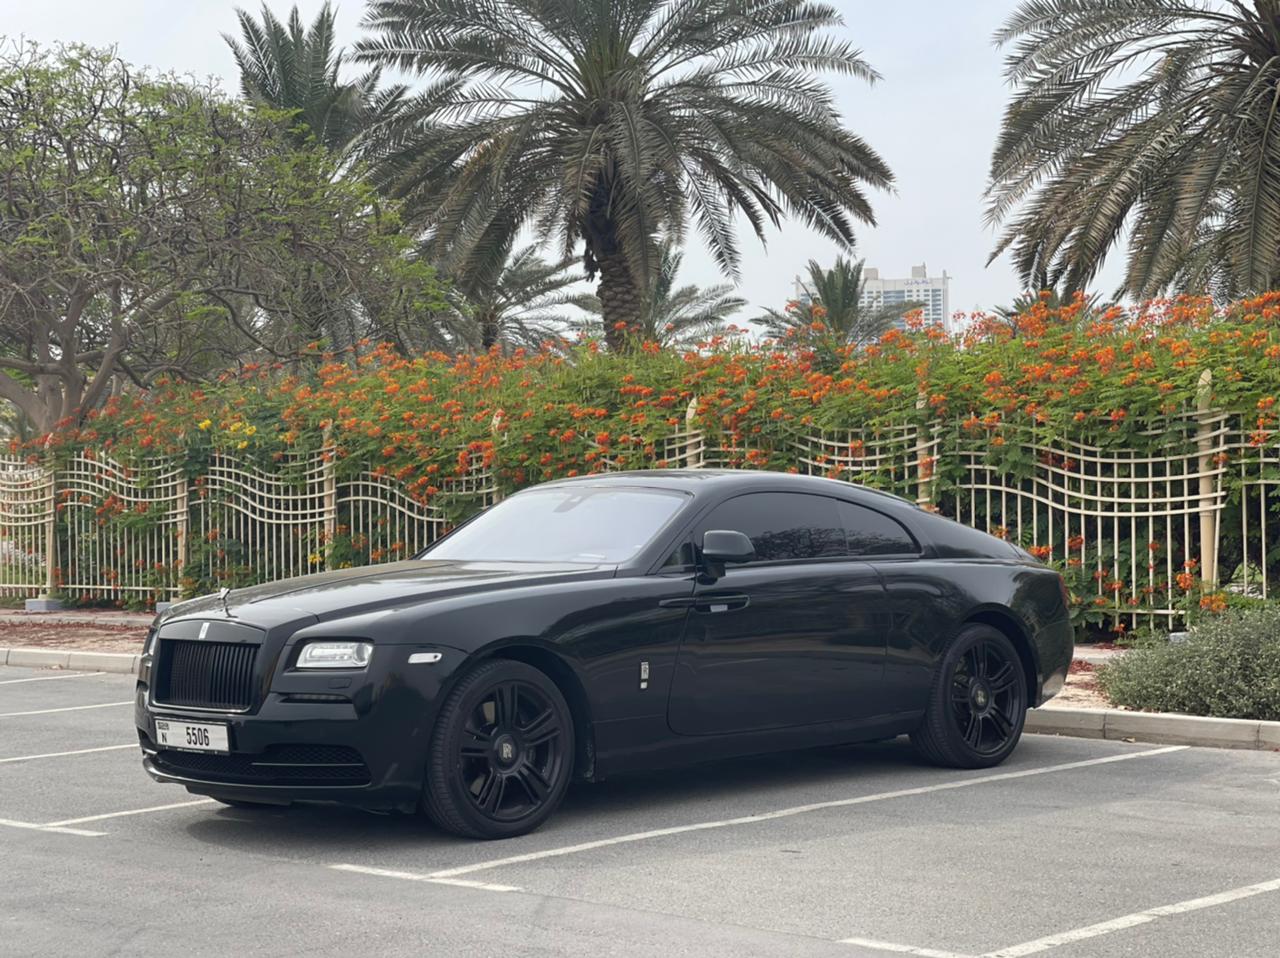 2017 Rolls Royce Wraith in Dubai  Friends Automotive  Facebook